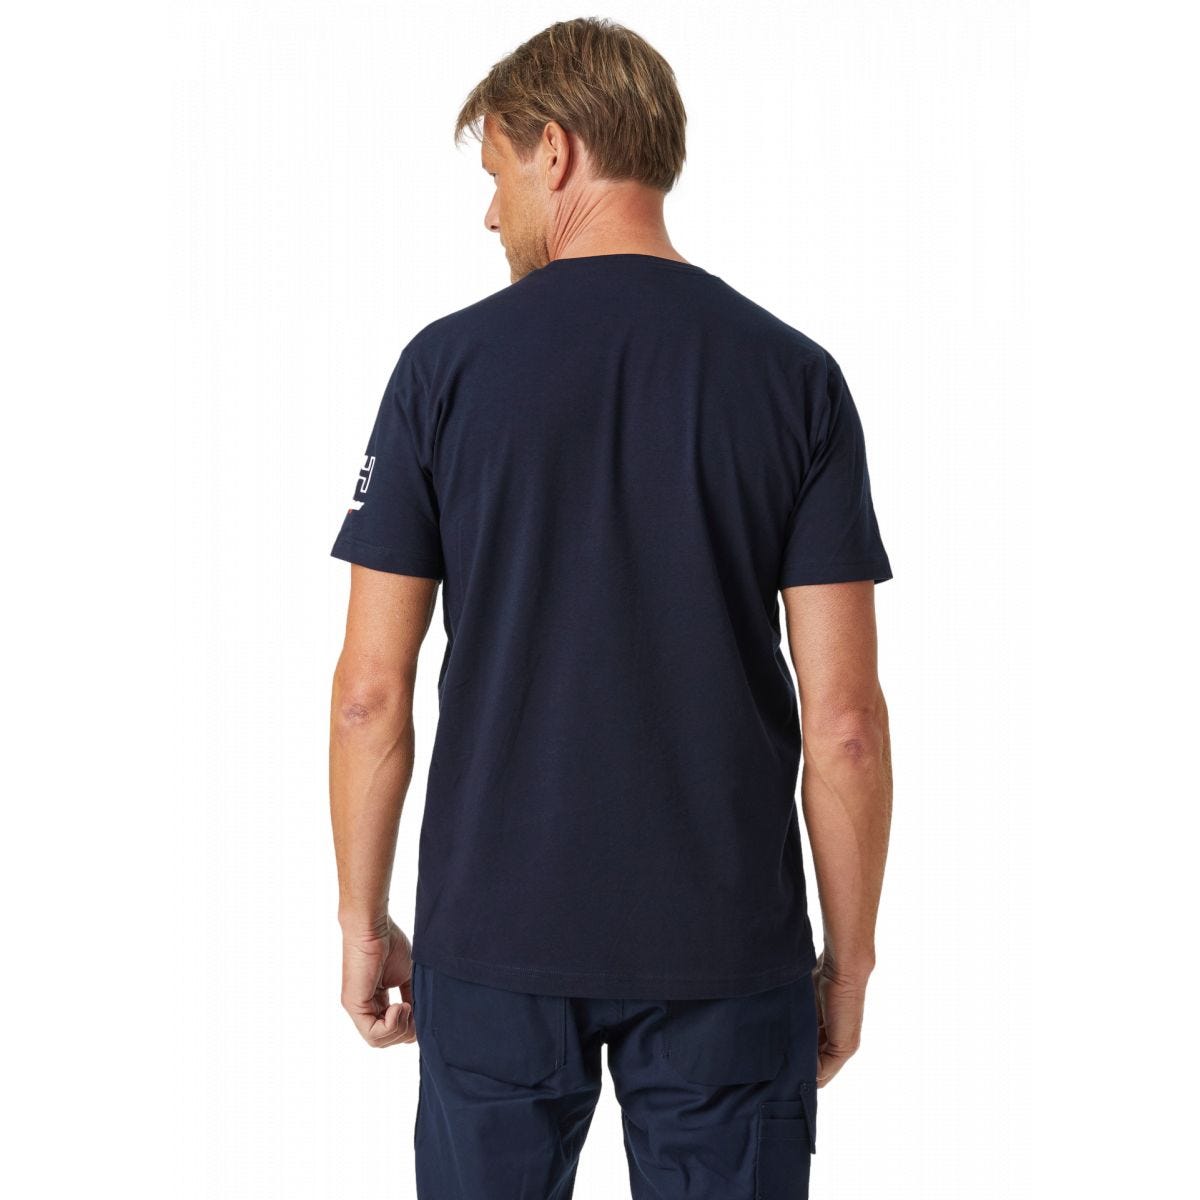 Tee-shirt Kensington Marine - Helly Hansen - Taille L 3